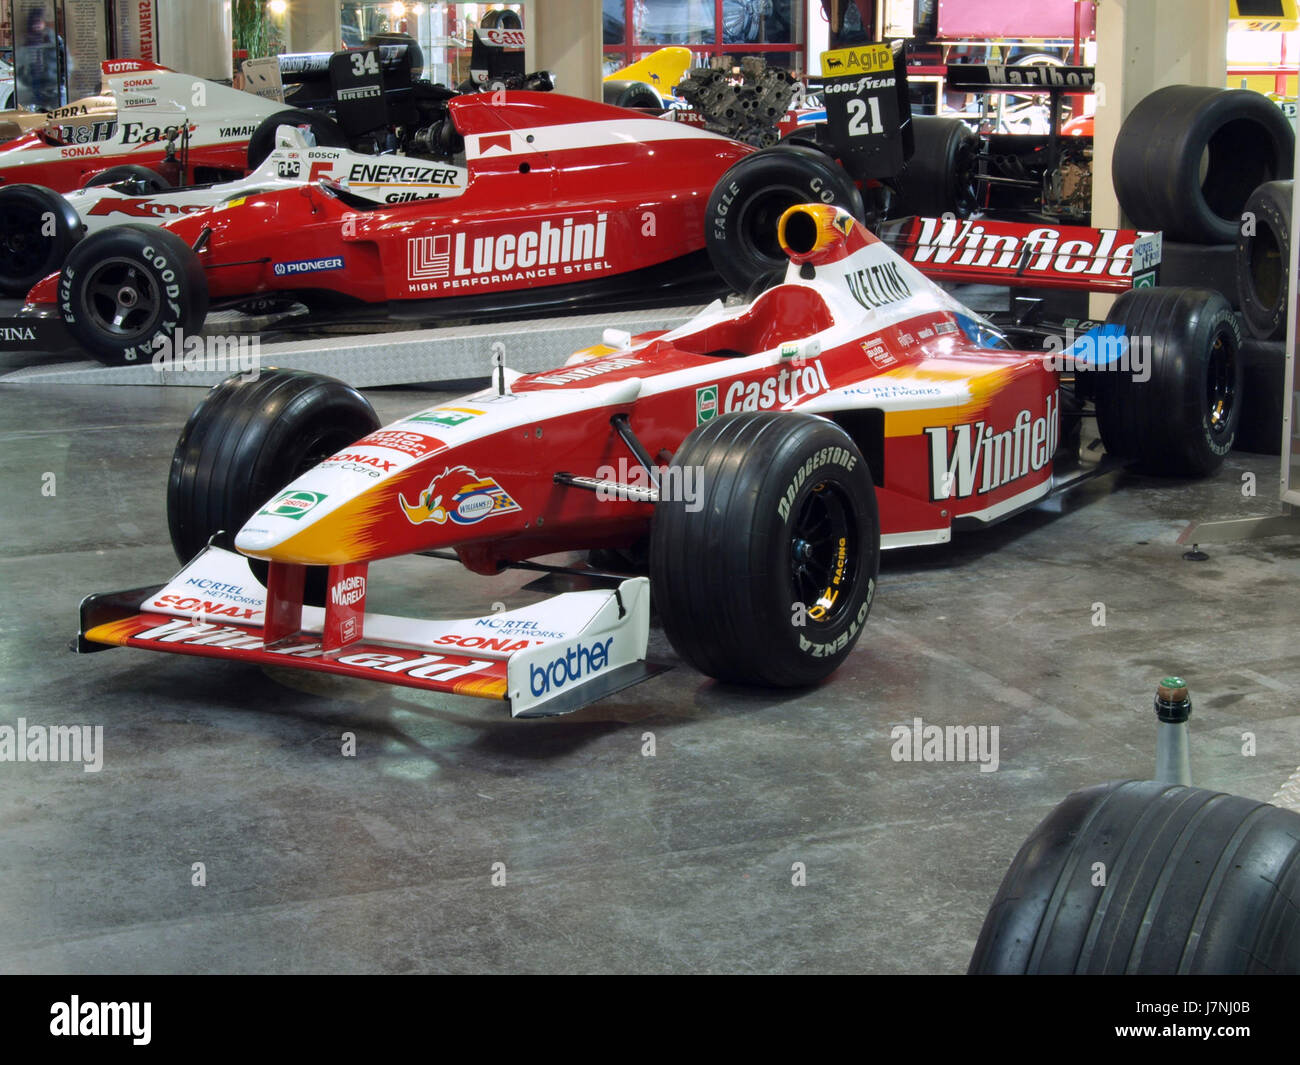 1999 Williams FW 21 pic1 Stock Photo